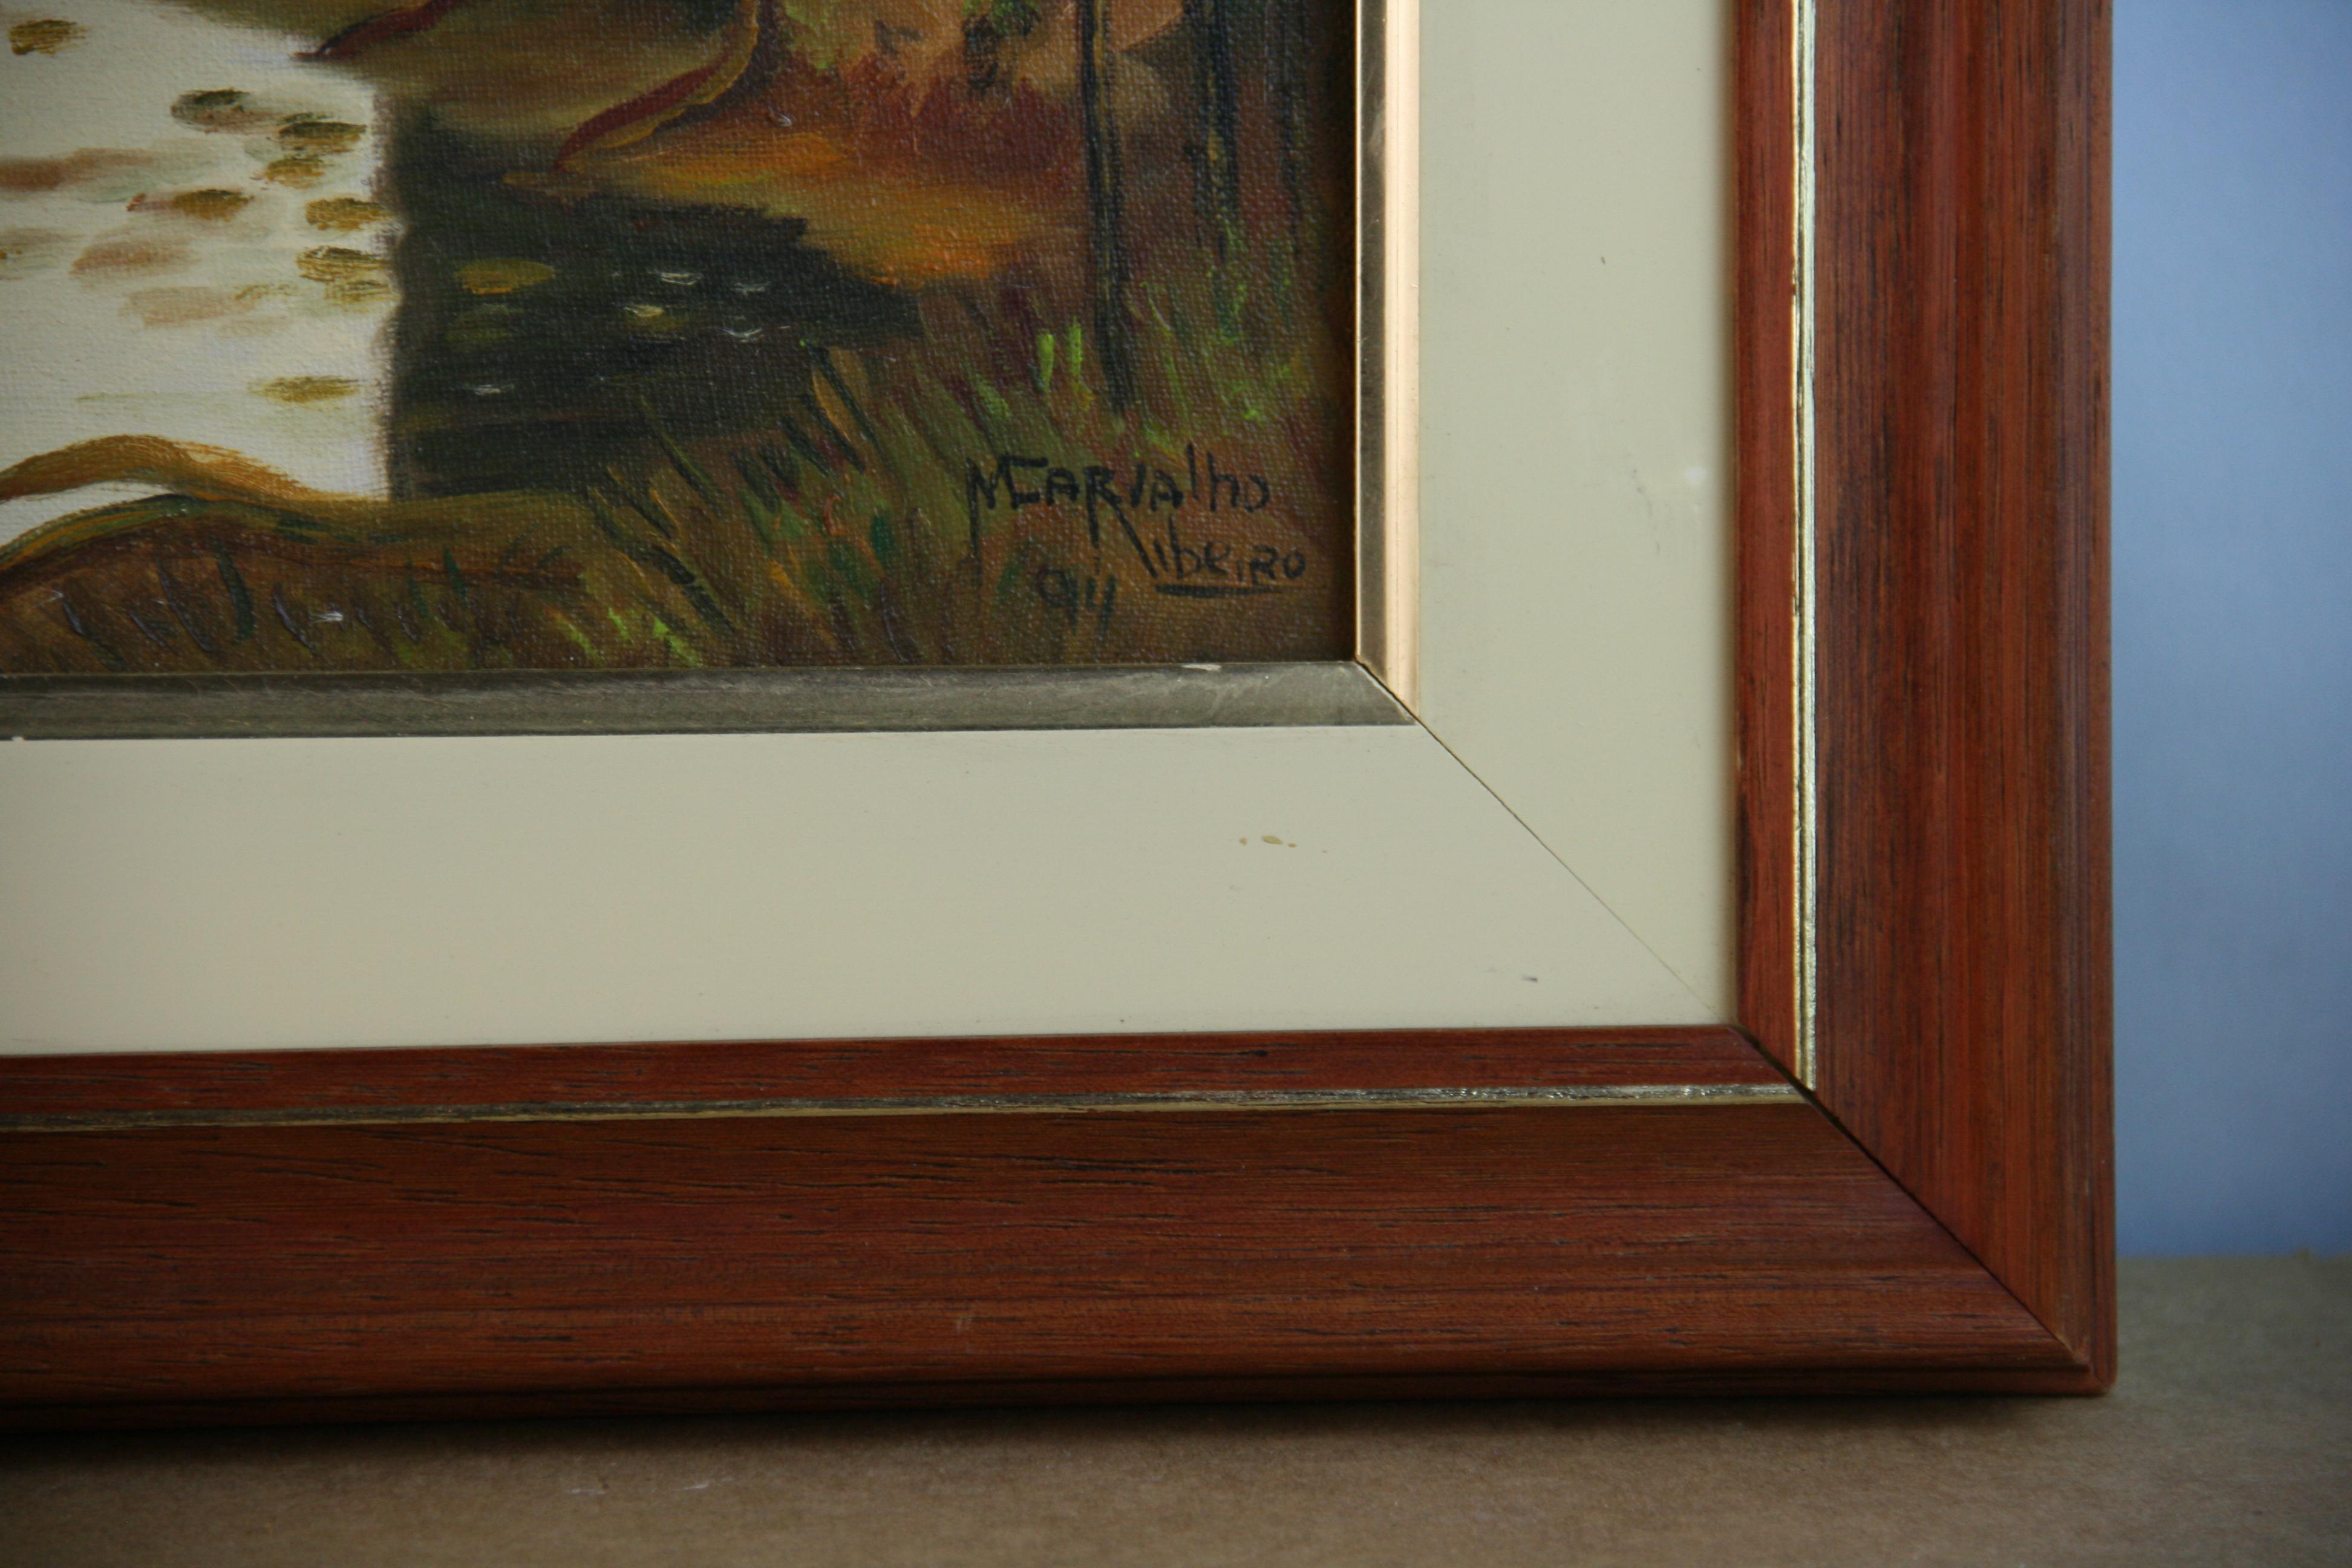 4039 Impressionist landscape oil painting
Set in a wood frame image size 11.5x15